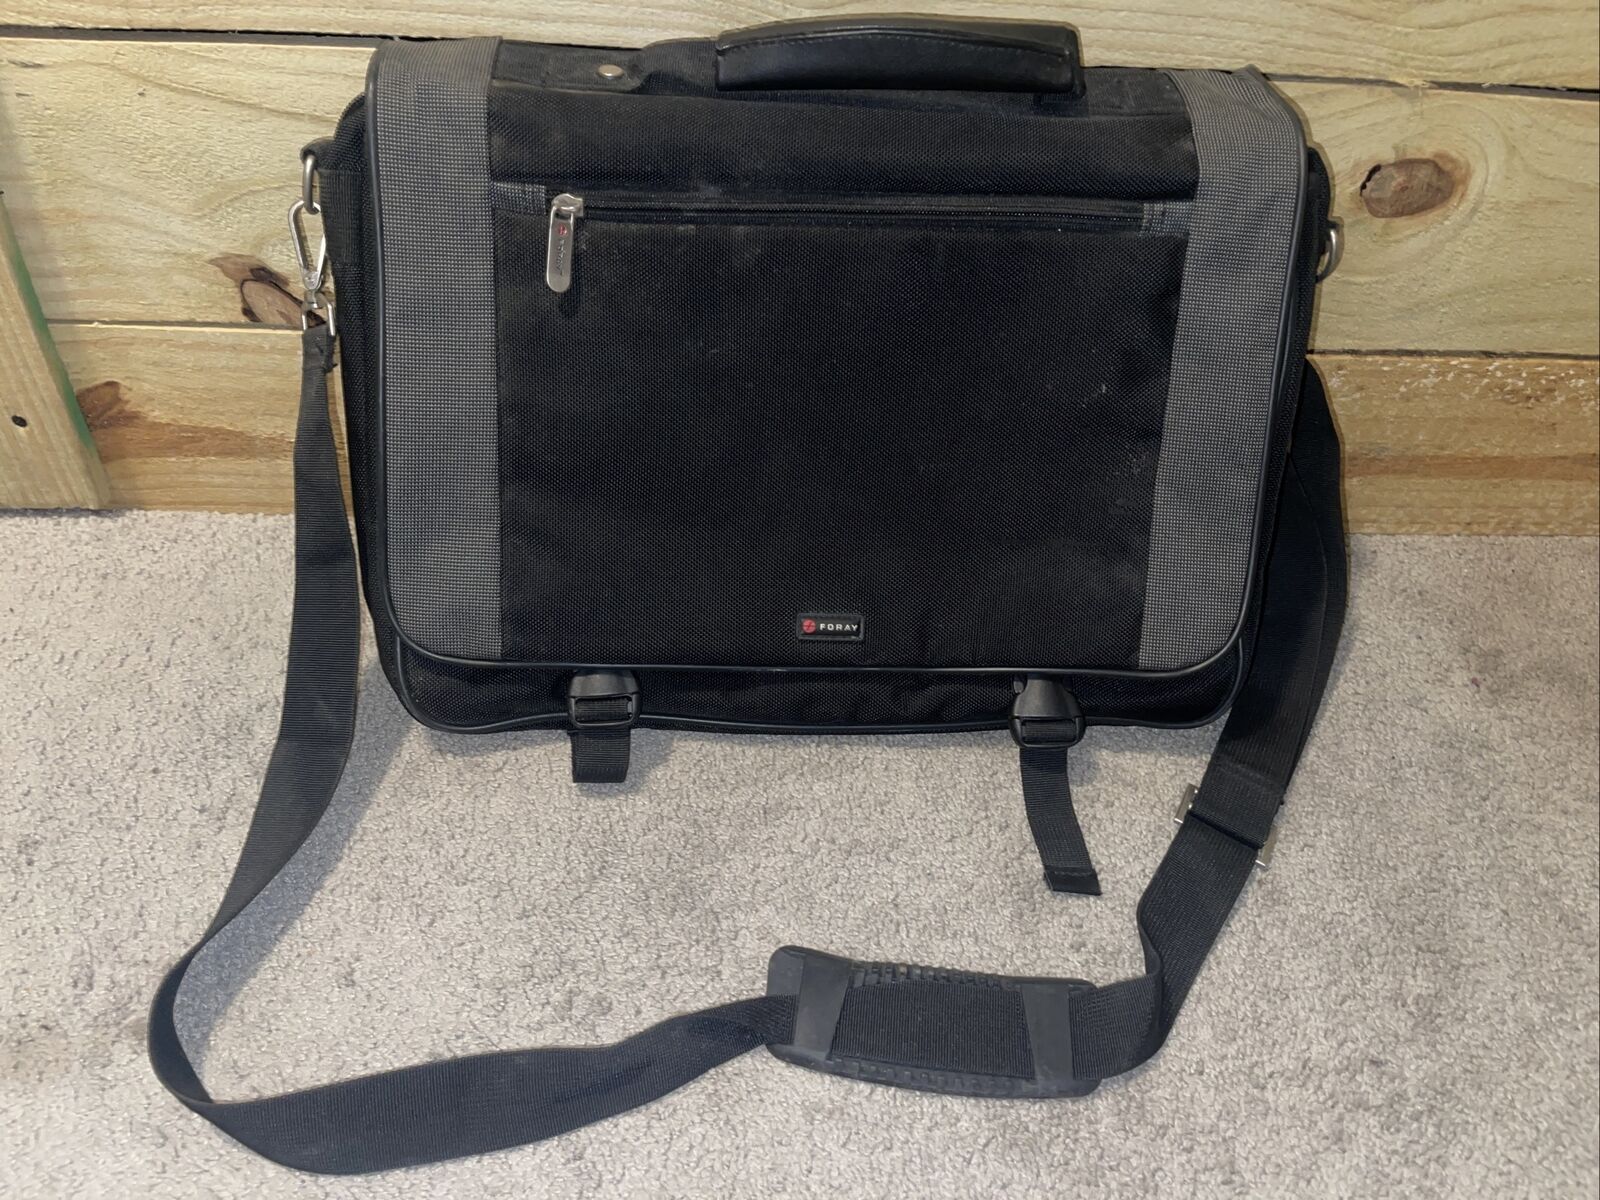 Foray Laptop Bag Case For 15 Inch Laptops